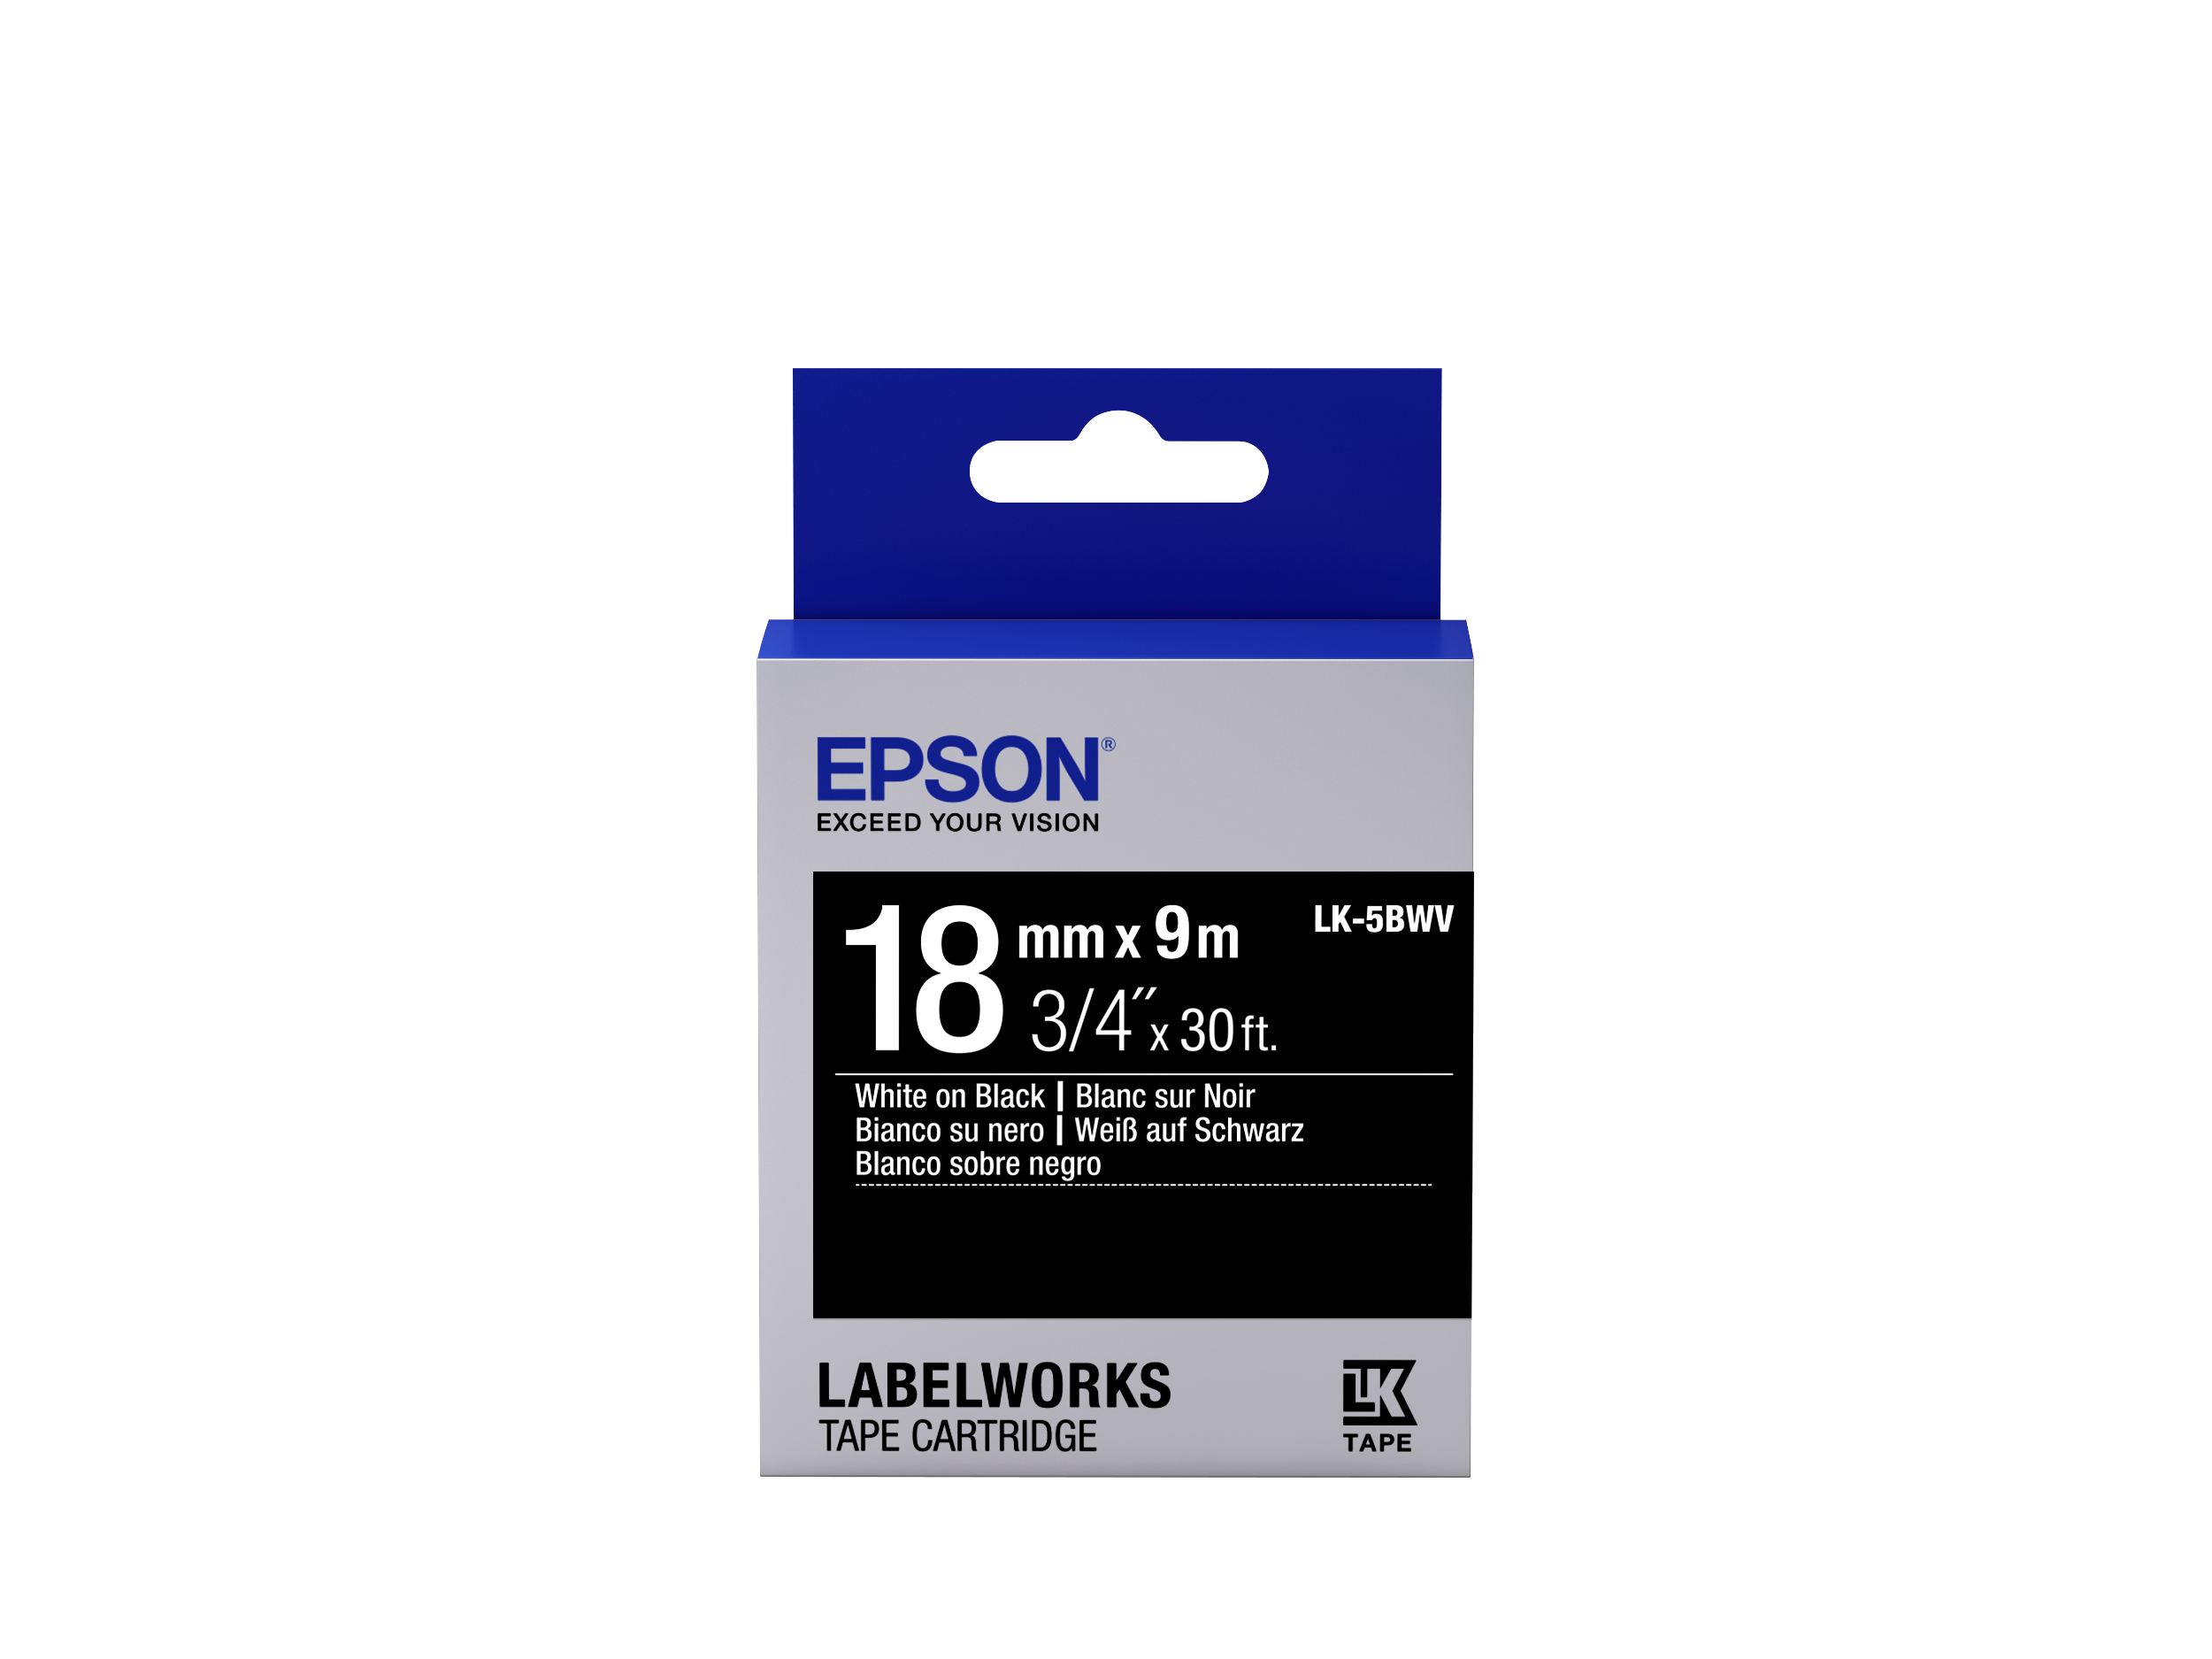 Epson etikettkassett intensiv – LK-5BWV intensiv vit/svart 18/9